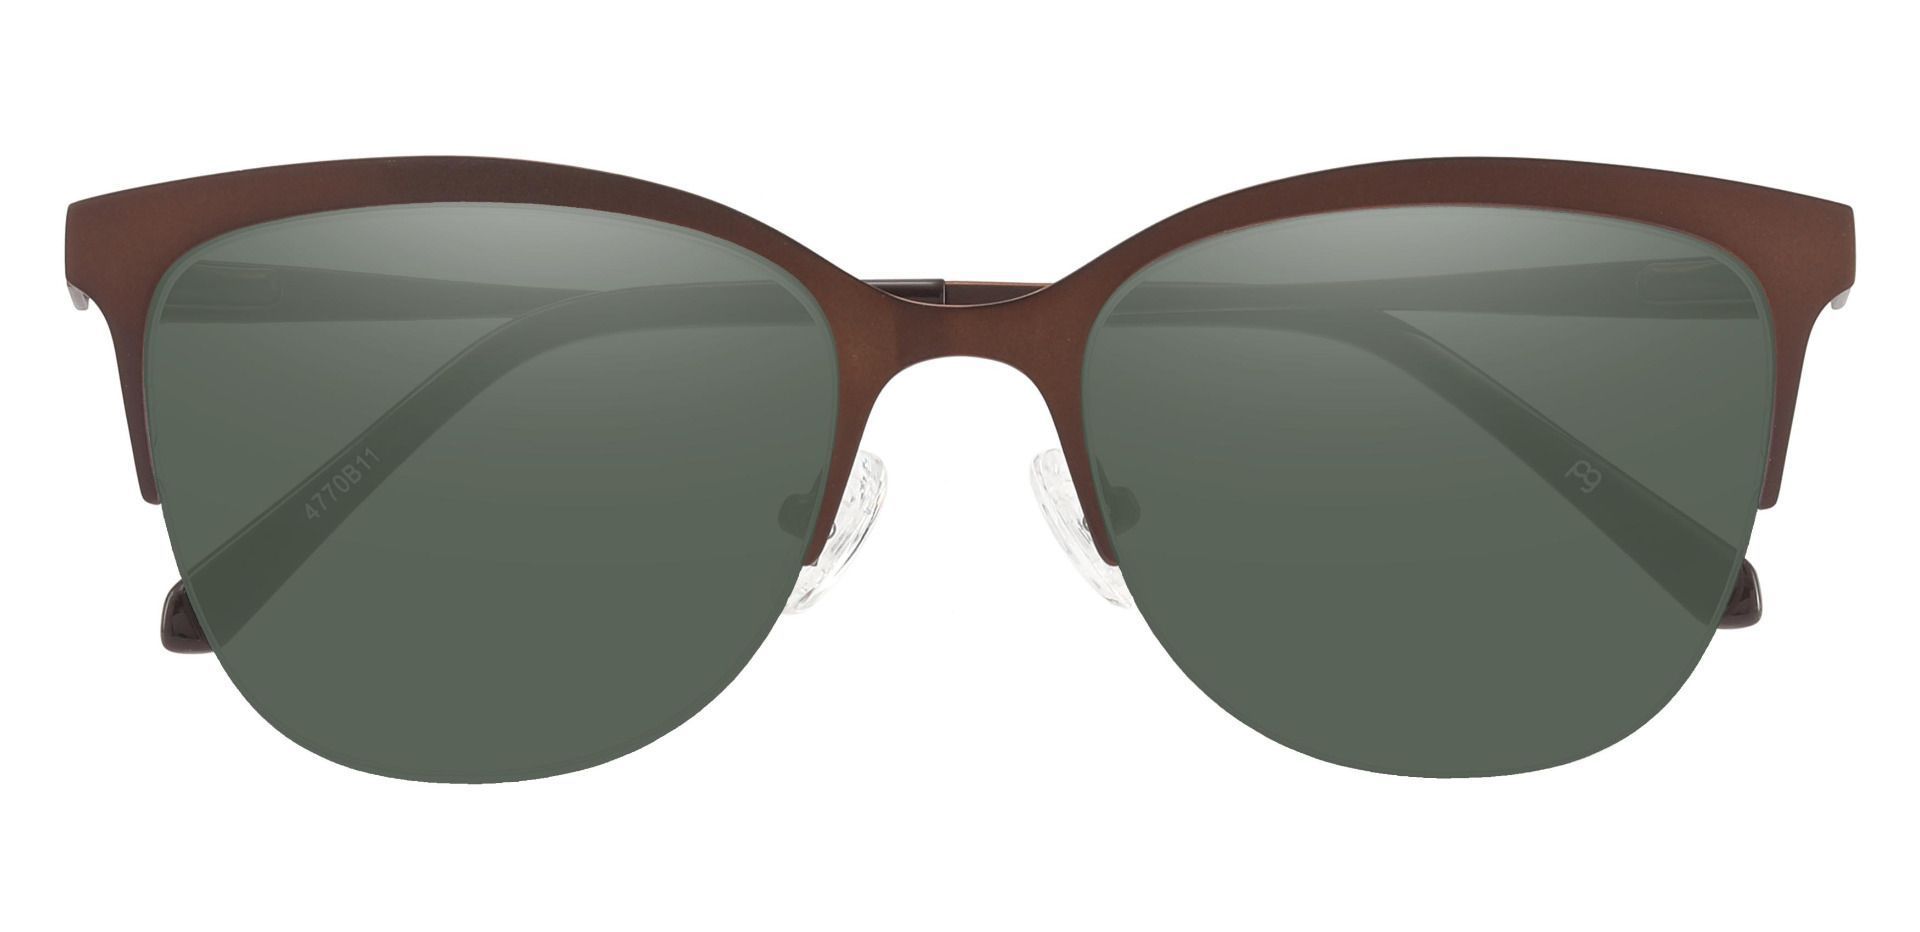 Winnie Oval Prescription Sunglasses - Brown Frame With Green Lenses